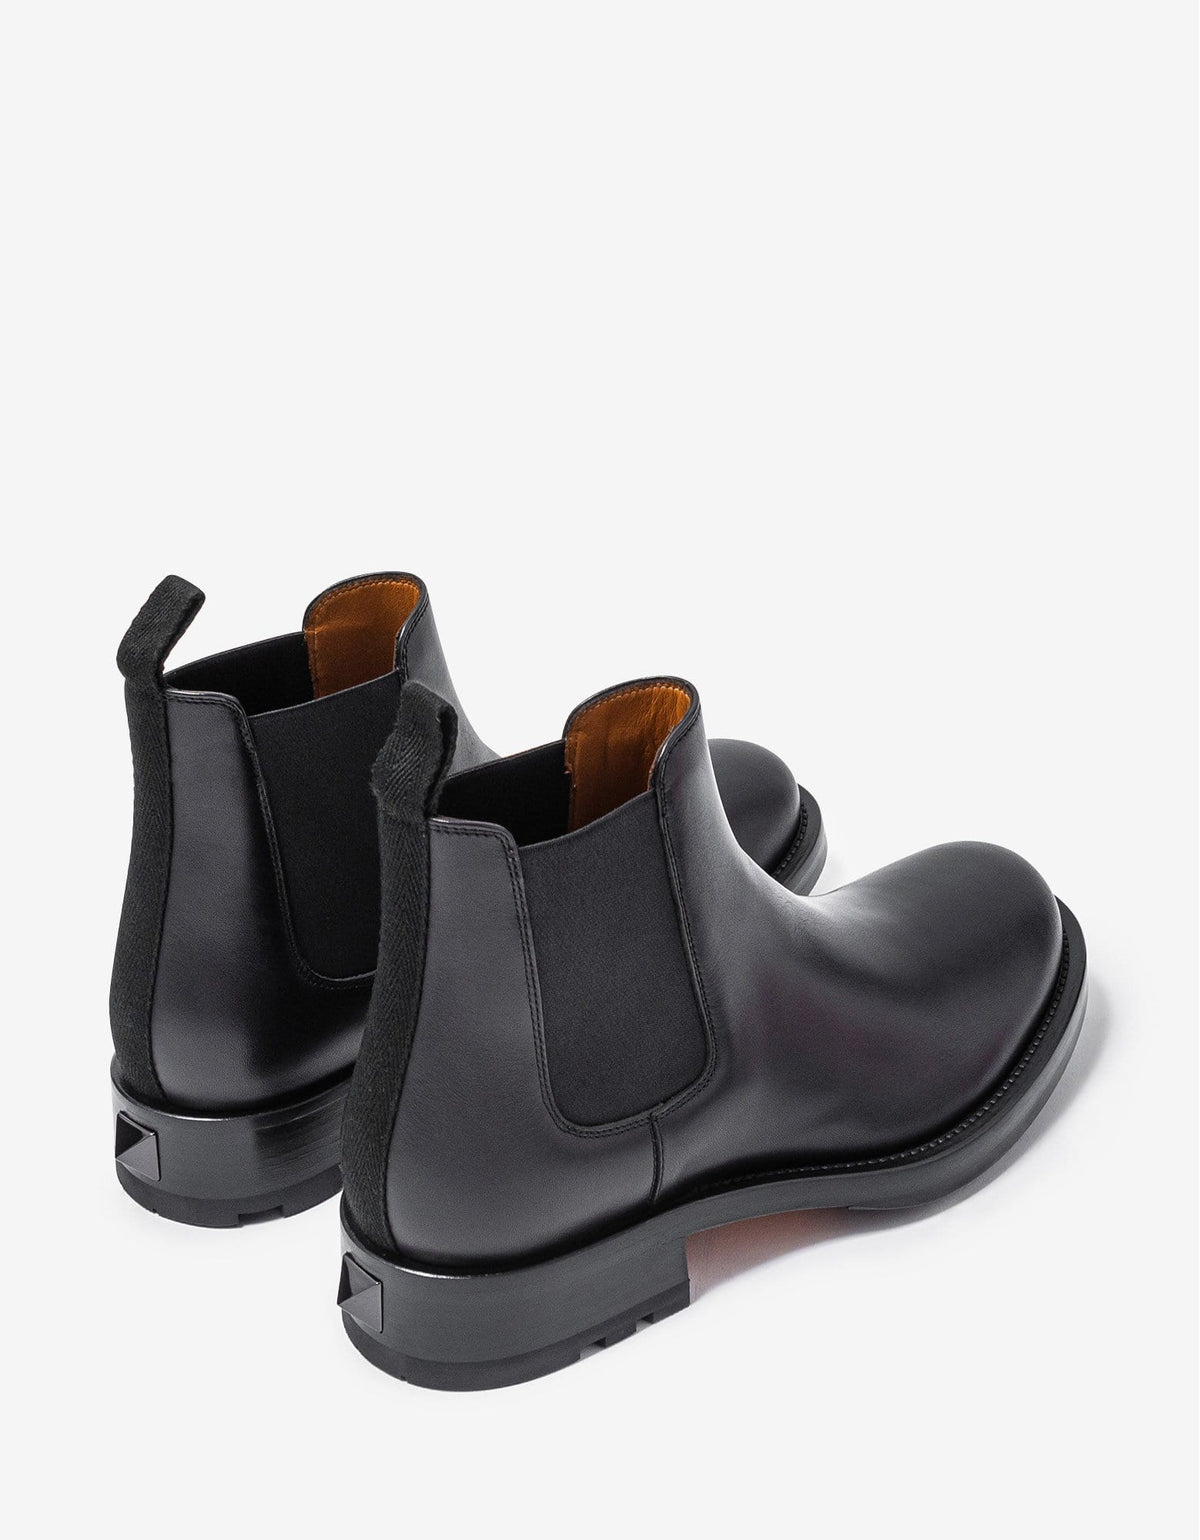 Valentino Garavani Black Roman Stud Leather Chelsea Boots